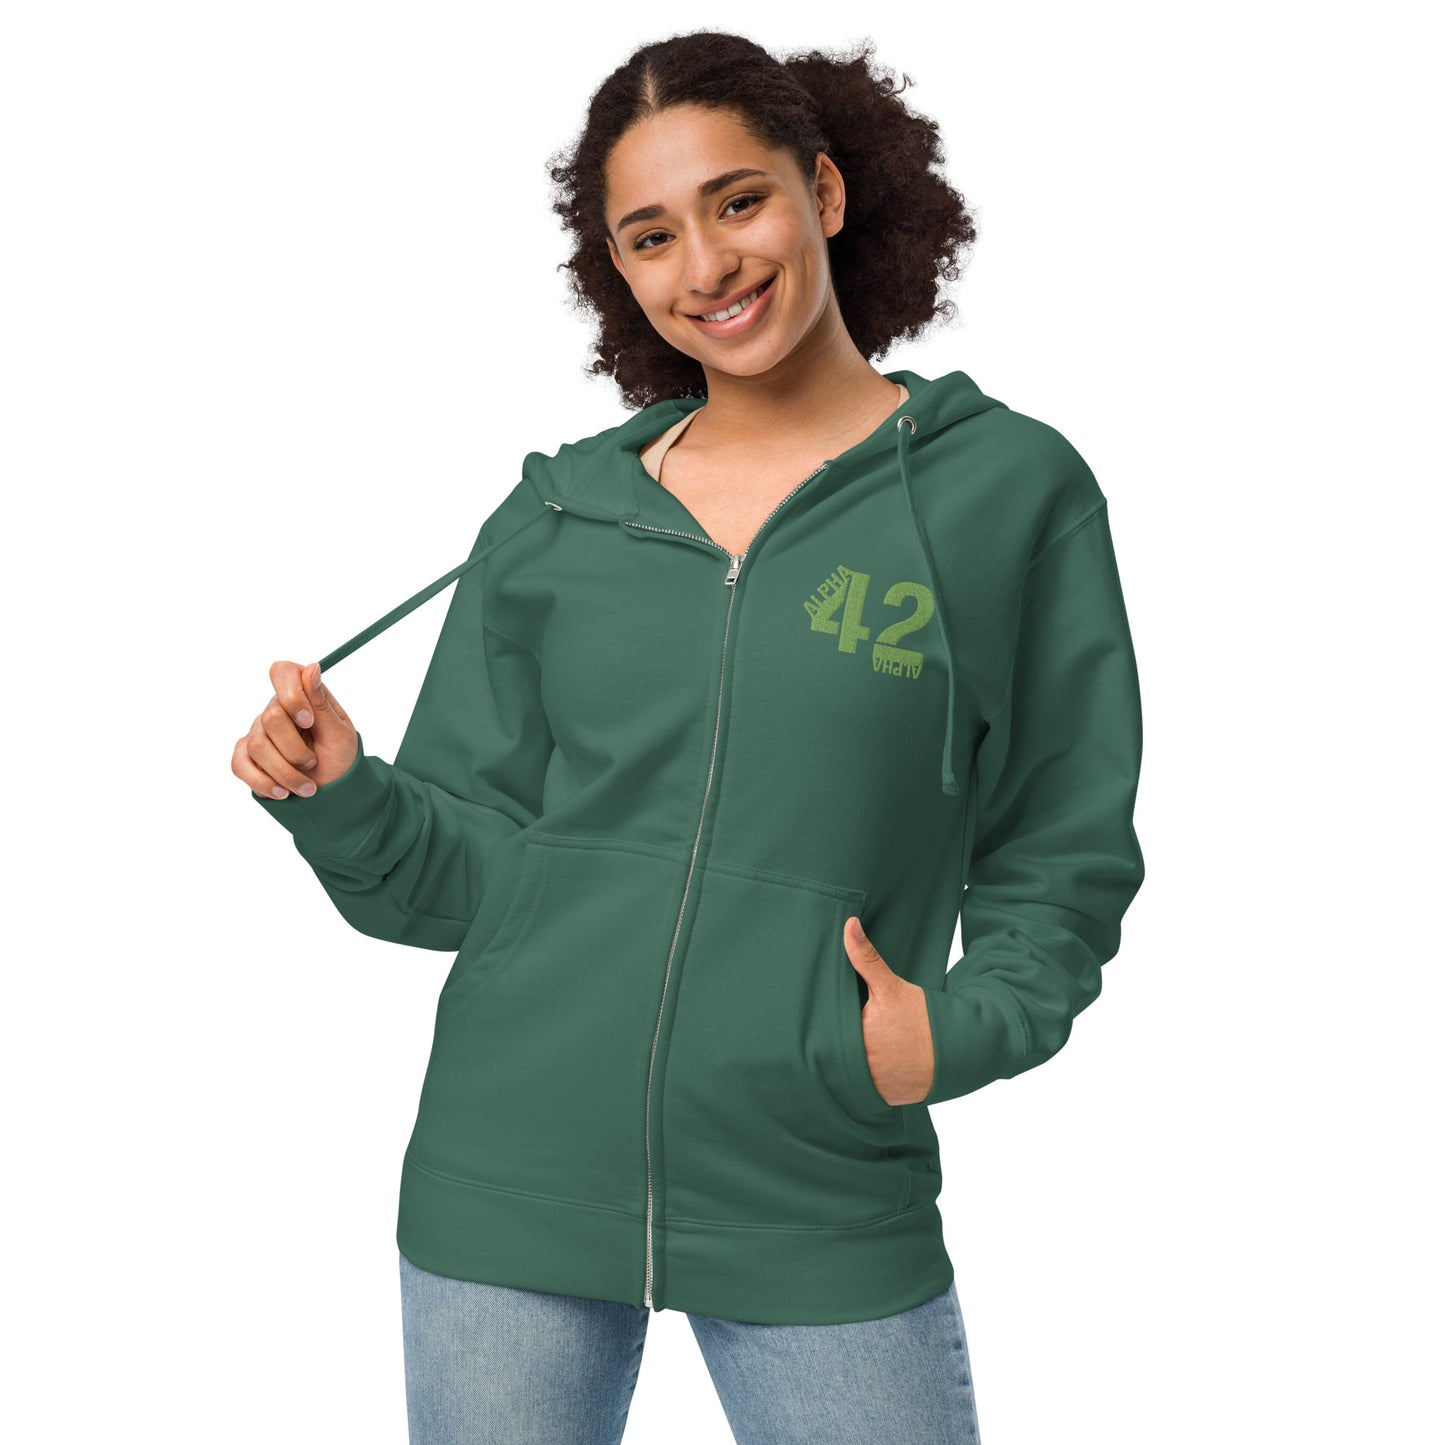 A42A - Unisex fleece zip up hoodie